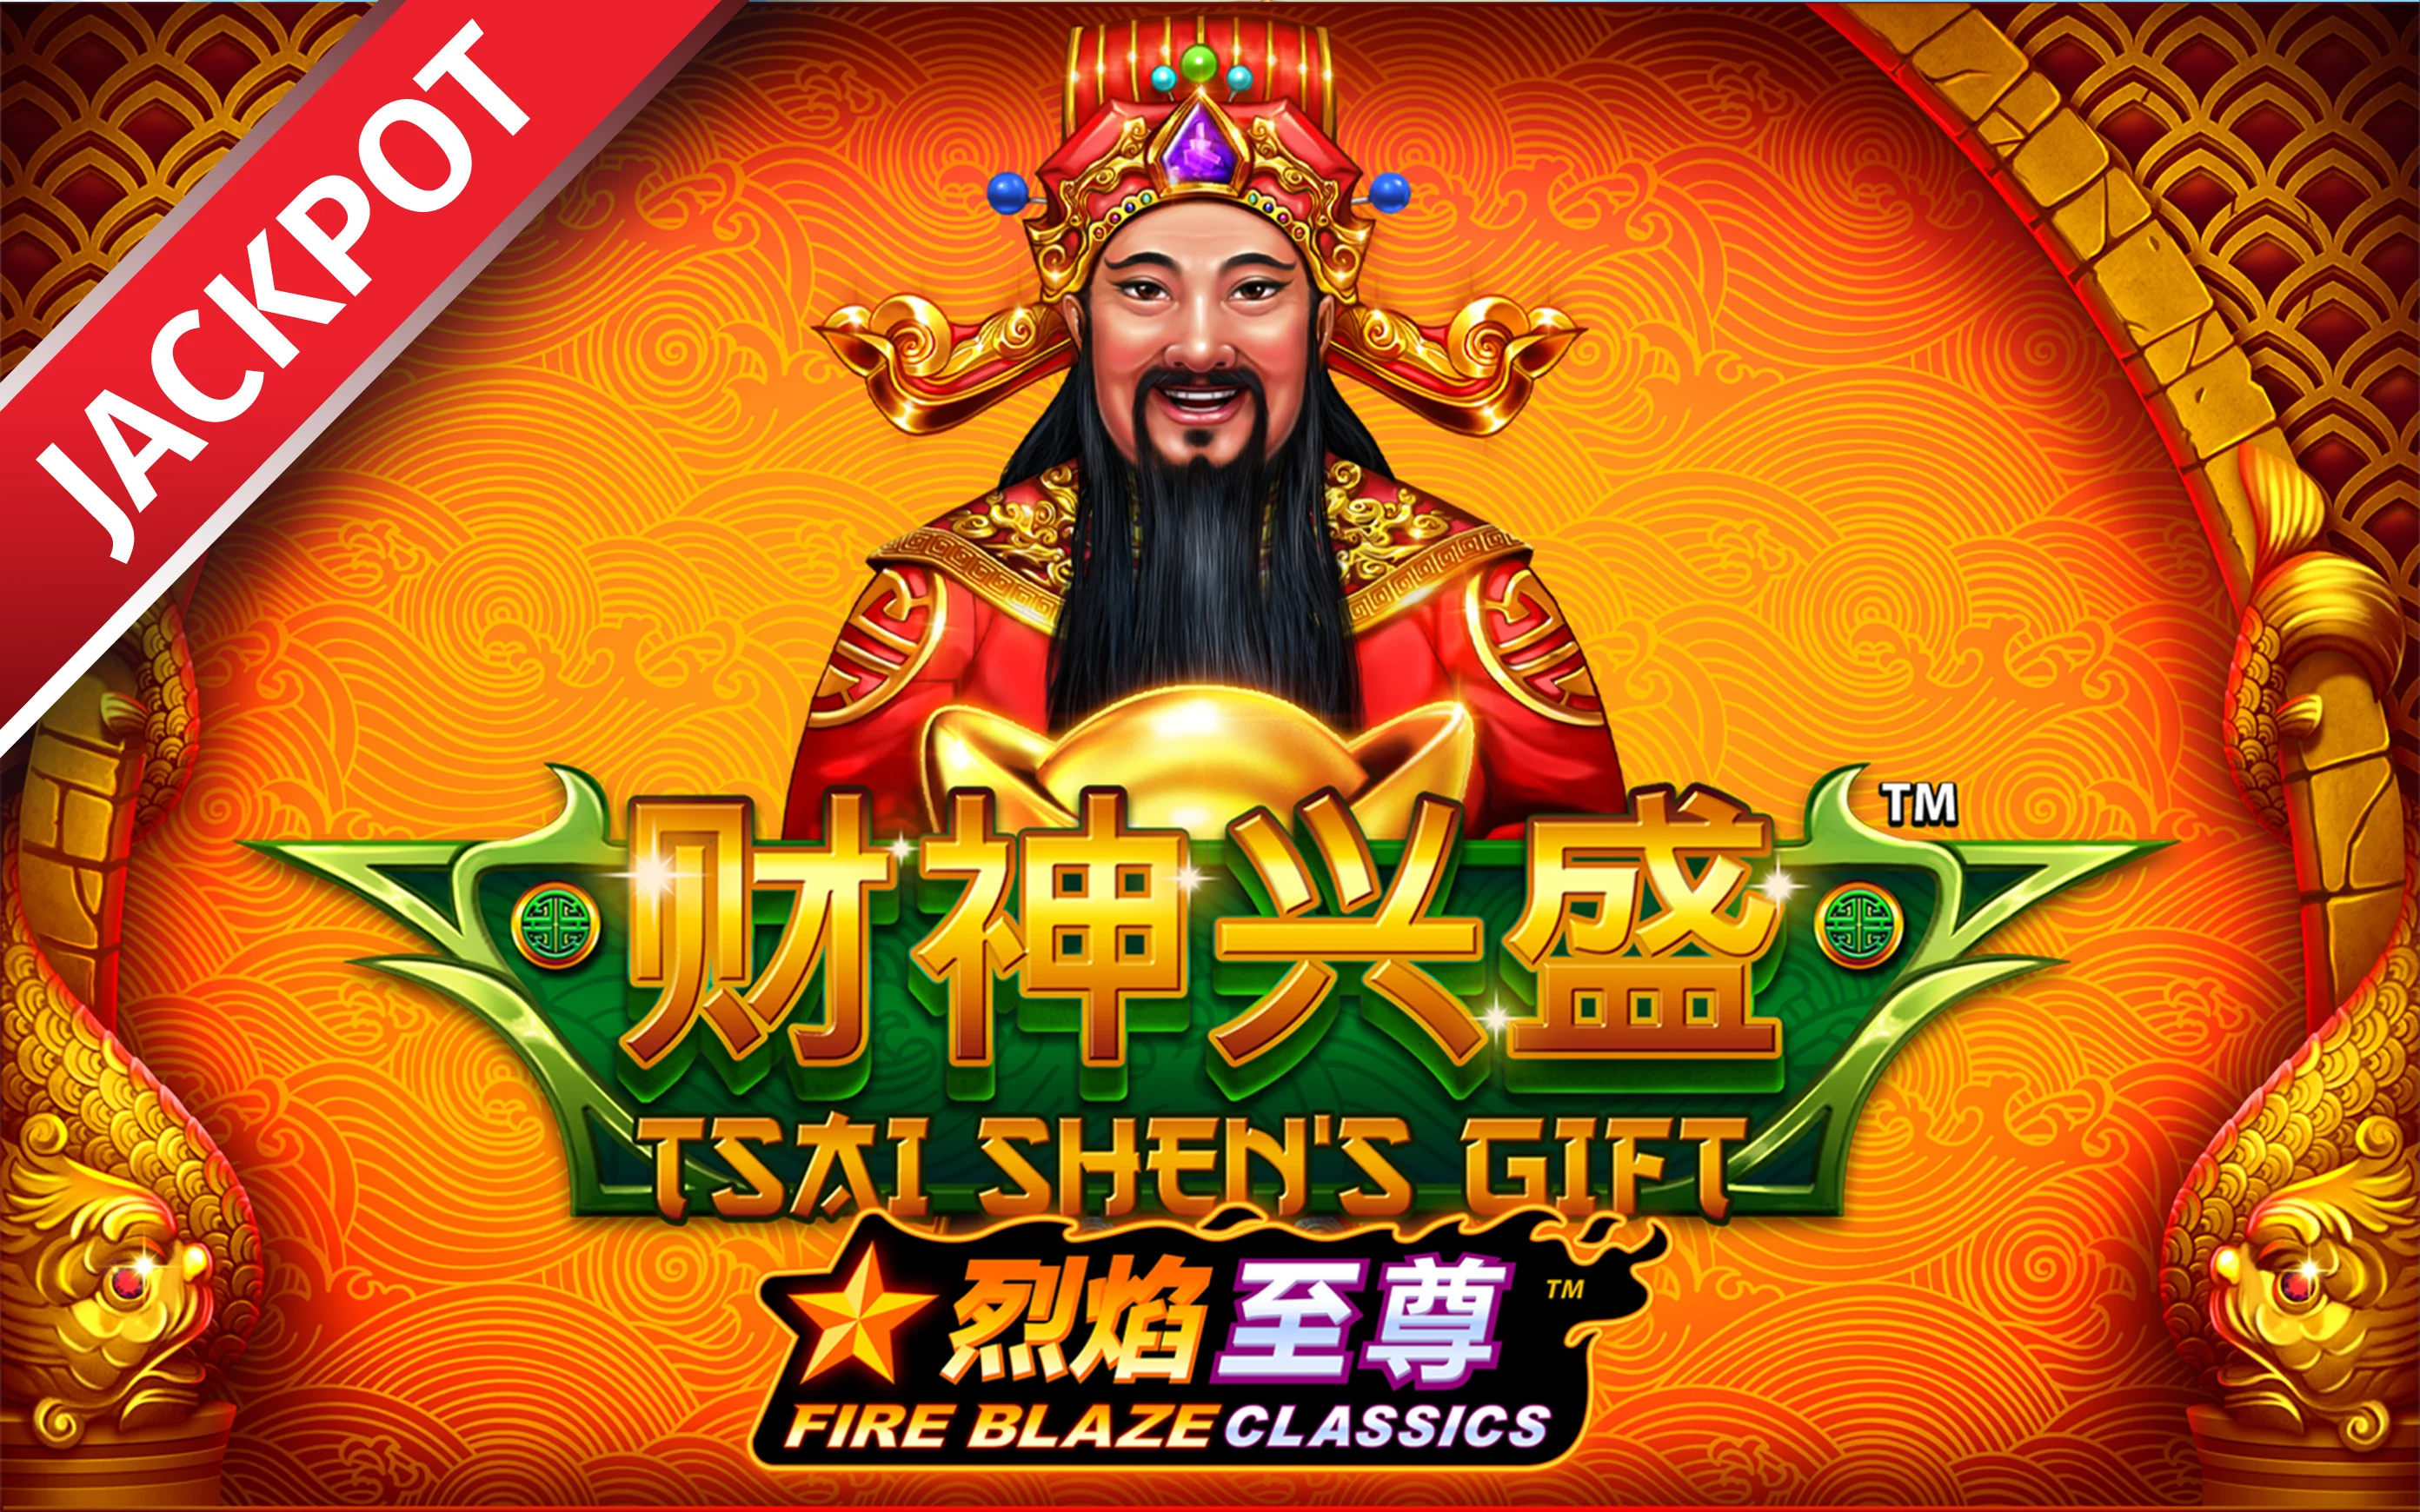 Juega a Fire Blaze: Tsai Shens Gift en el casino en línea de Starcasino.be